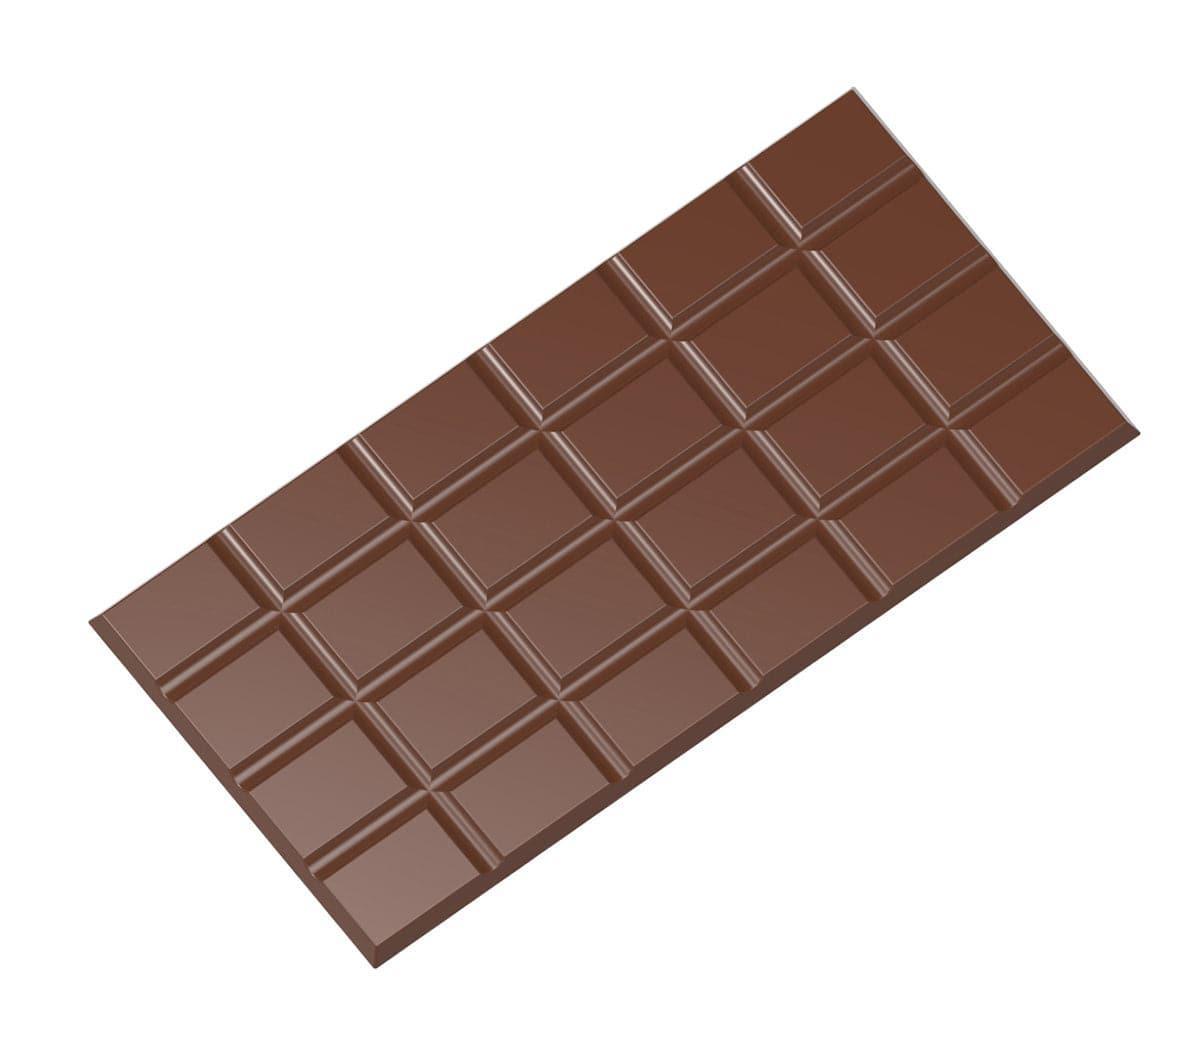 CHOCOLATE MOLD TABLET 4X6 RECTANGLE CW2436 - Zucchero Canada